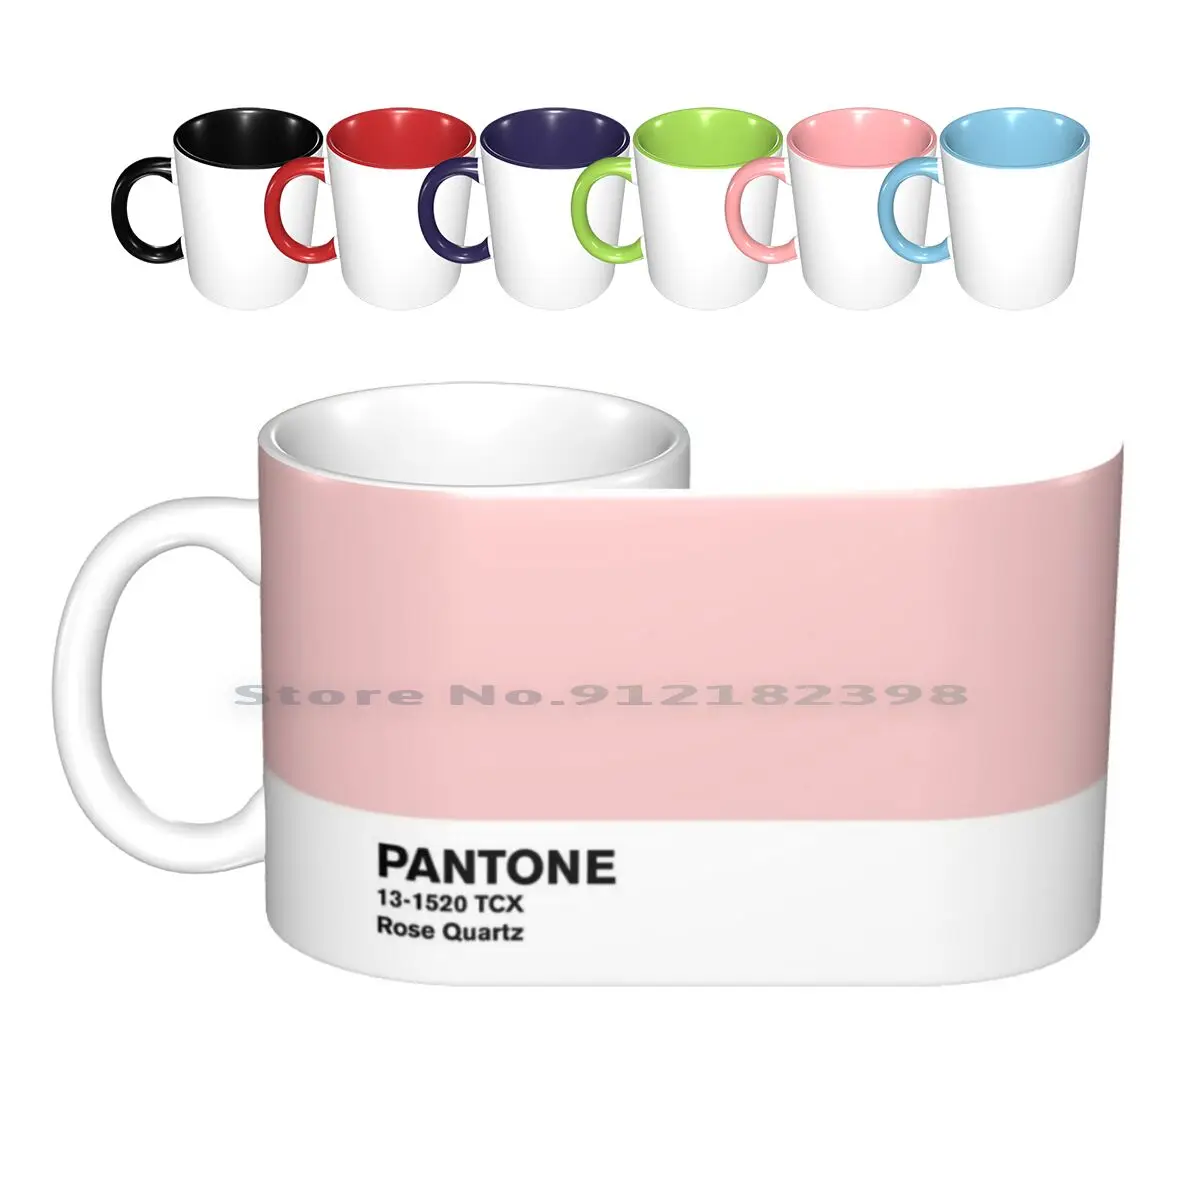 Rose Quartz Pantone Ceramic Mugs Coffee Cups Milk Tea Mug Color Colored Colorful Colour Decorative Fashion Pantone Plain Simple